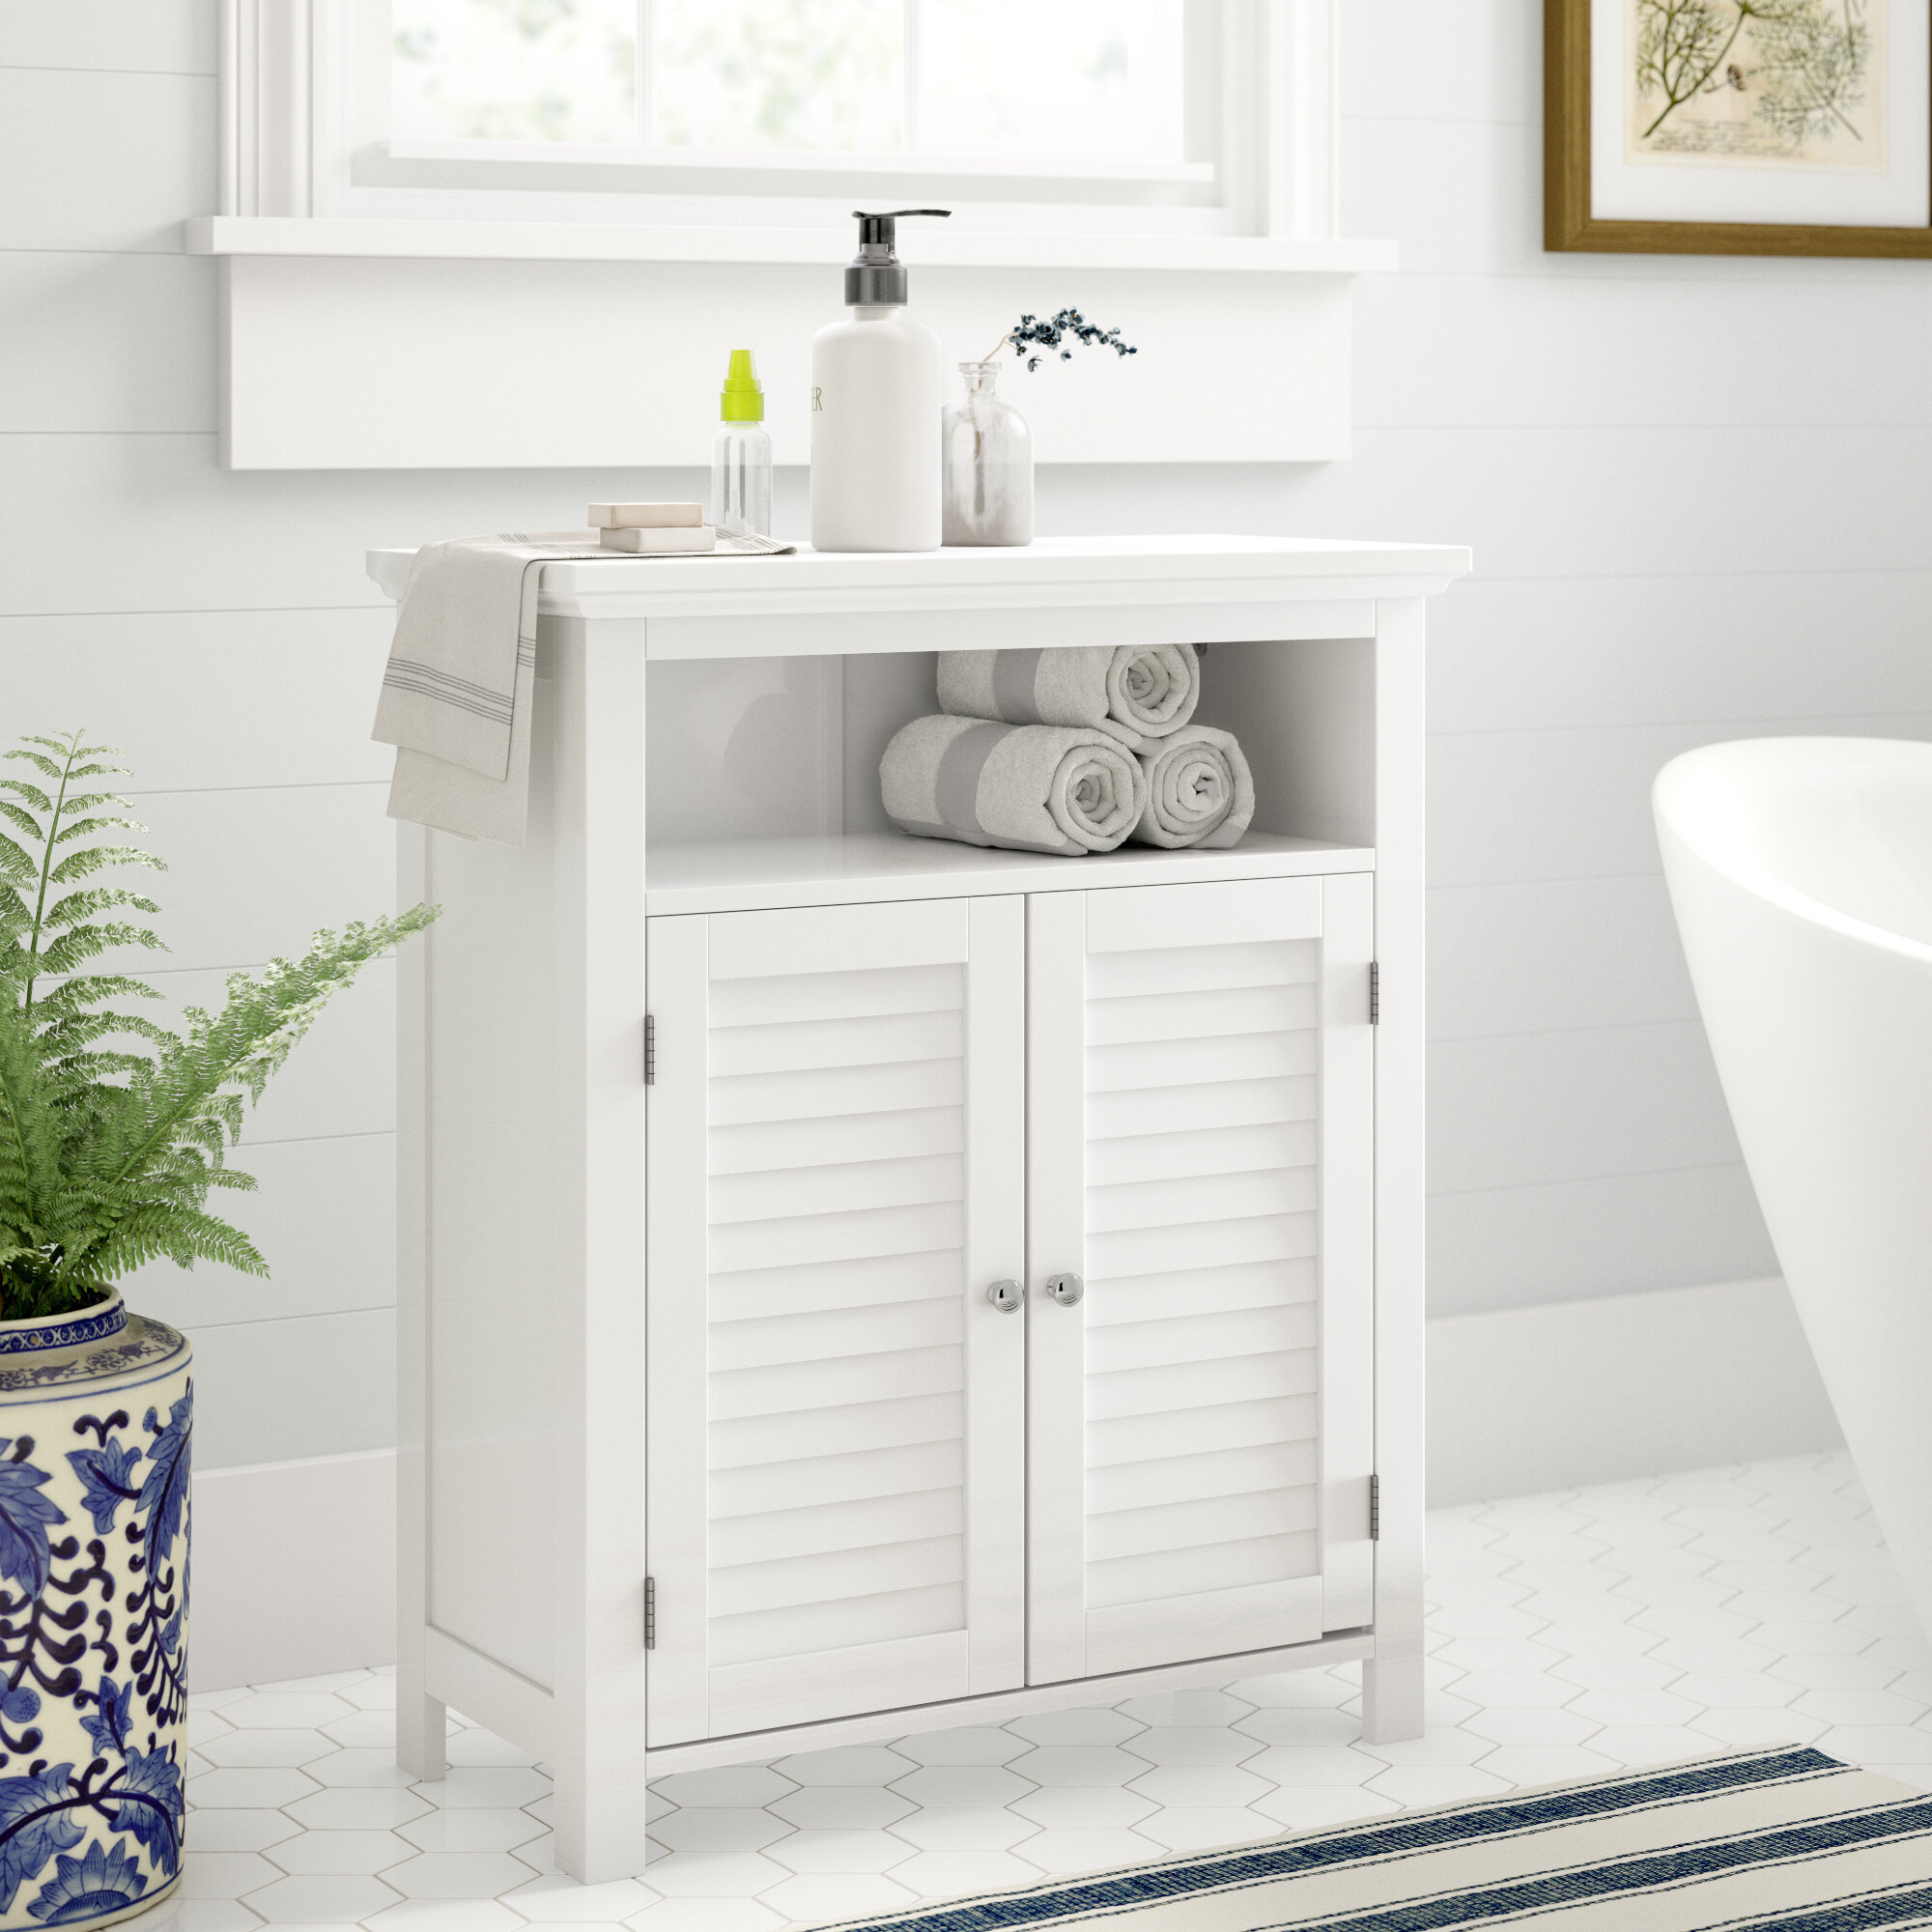 Sand & Stable Sleaford Freestanding Bathroom Cabinet & Reviews | Wayfair